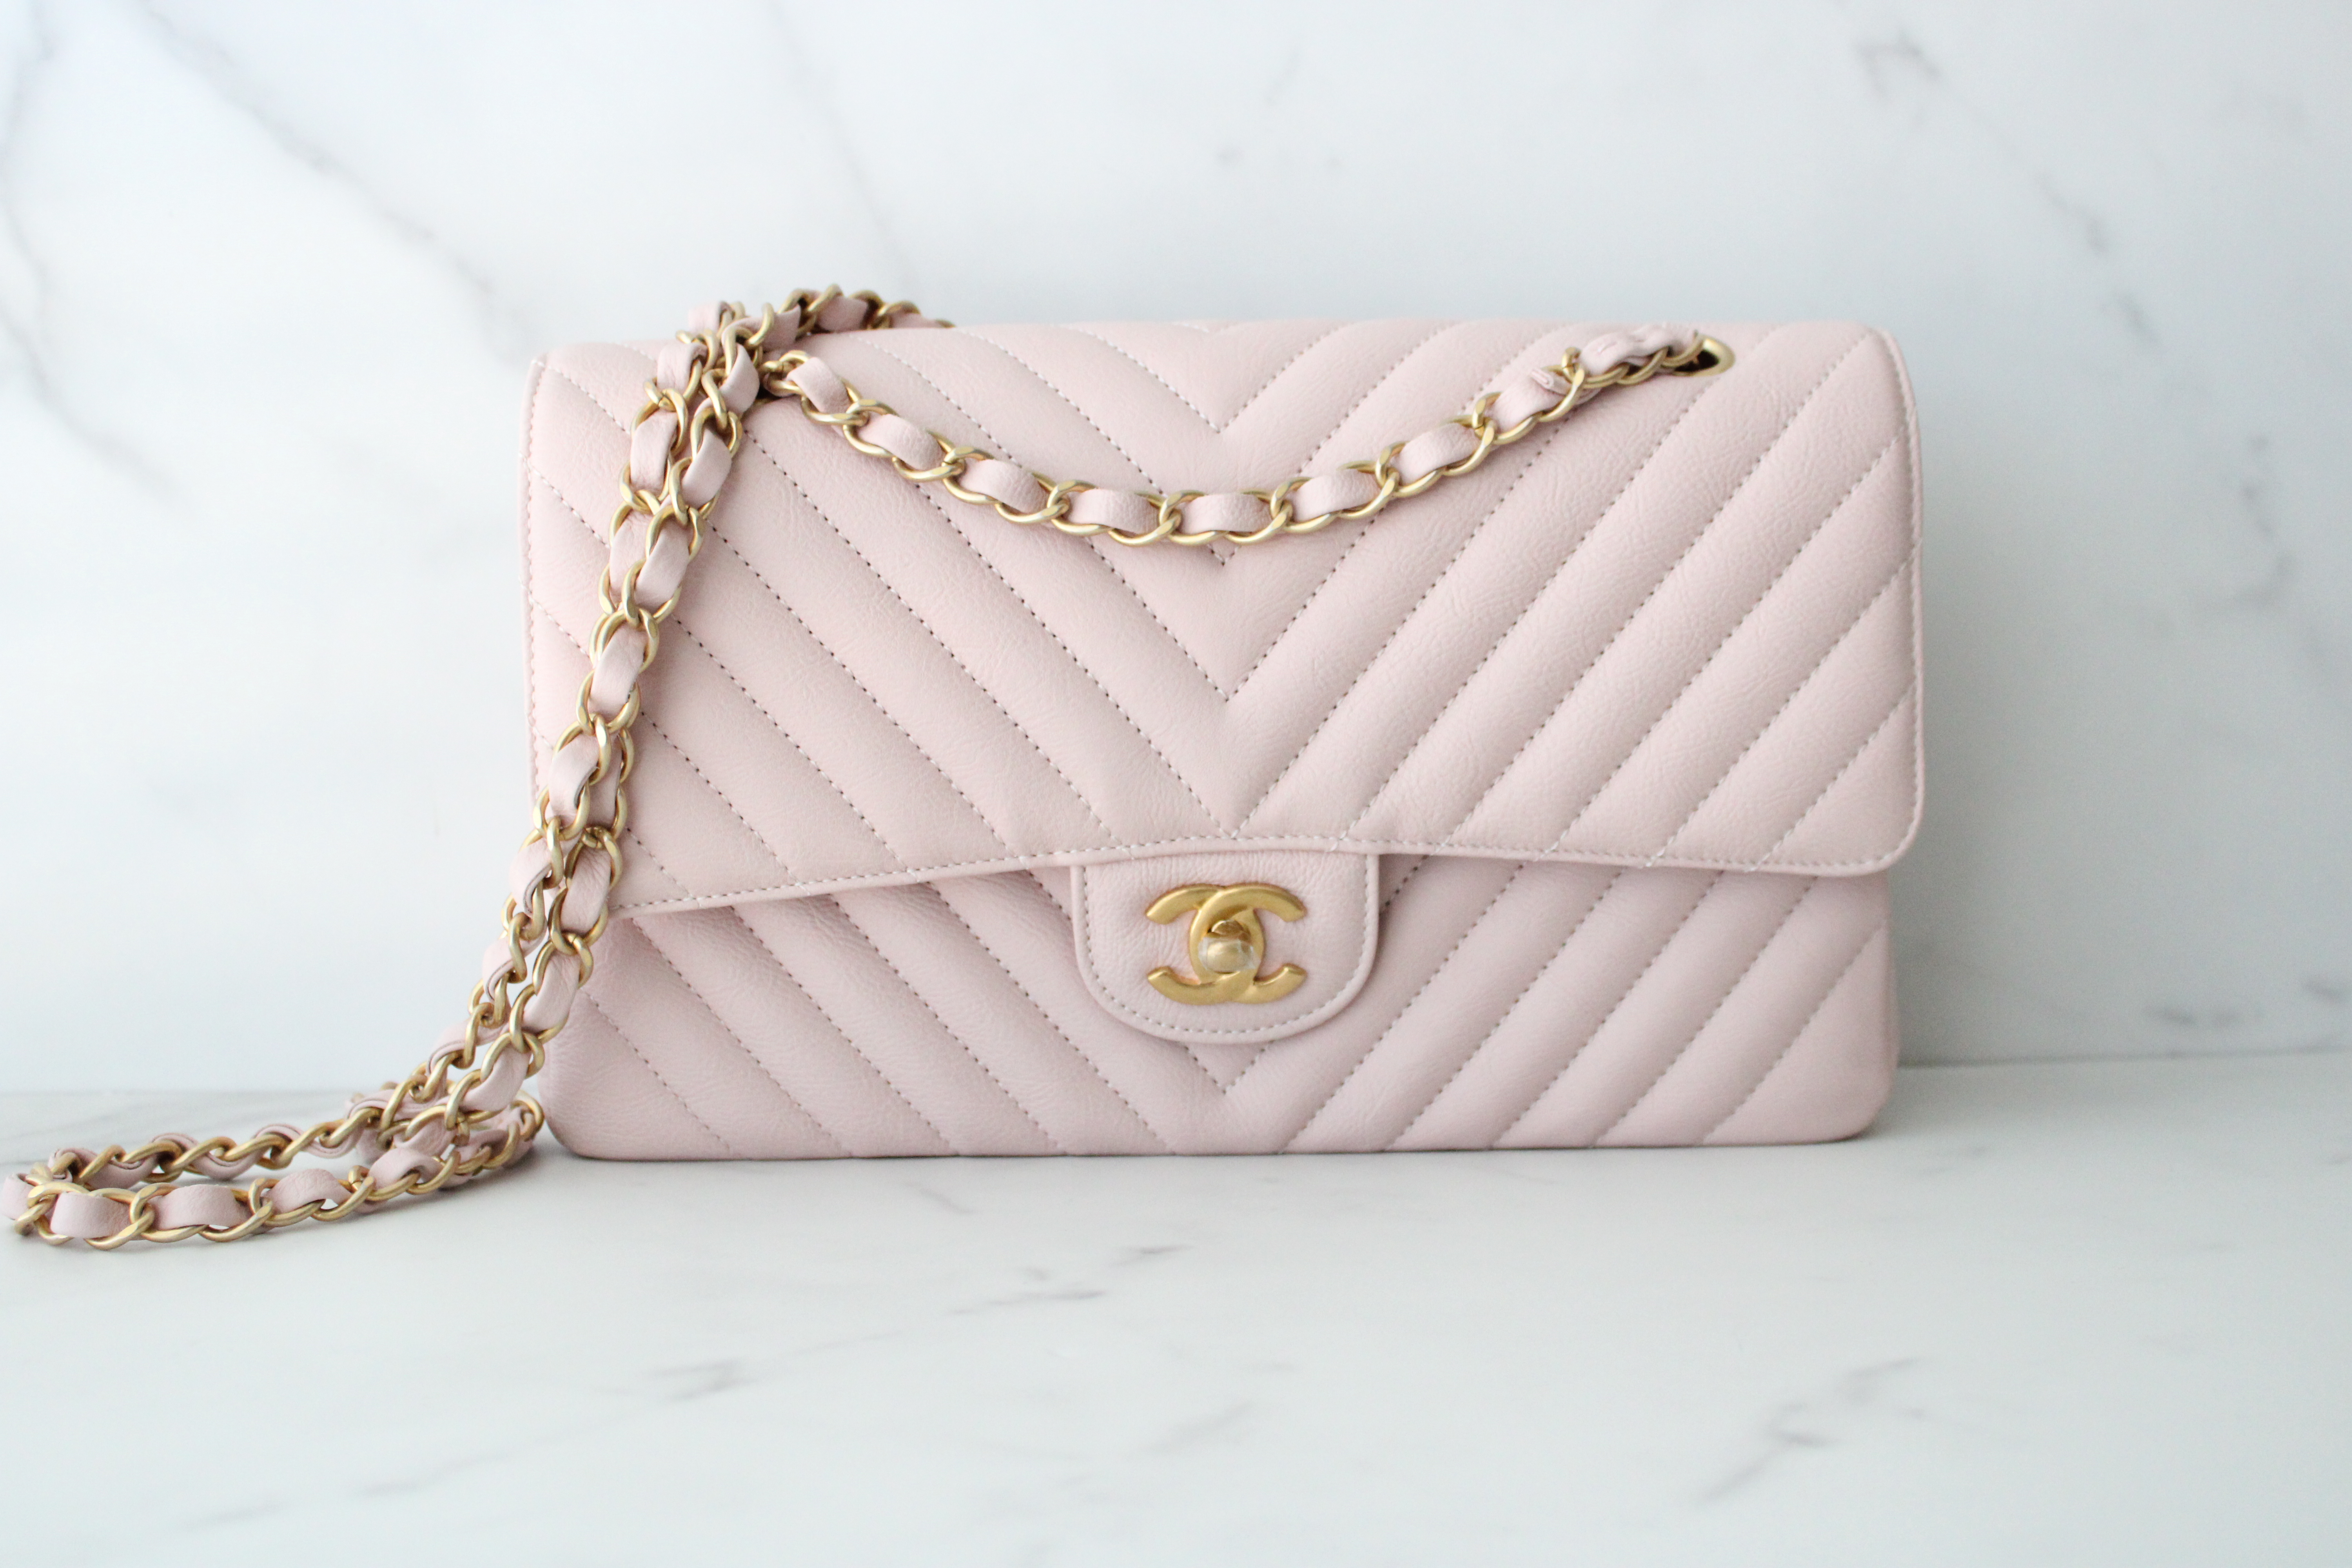 Chanel Classic Medium Double Flap, 17c Light Pink Calfskin Leather